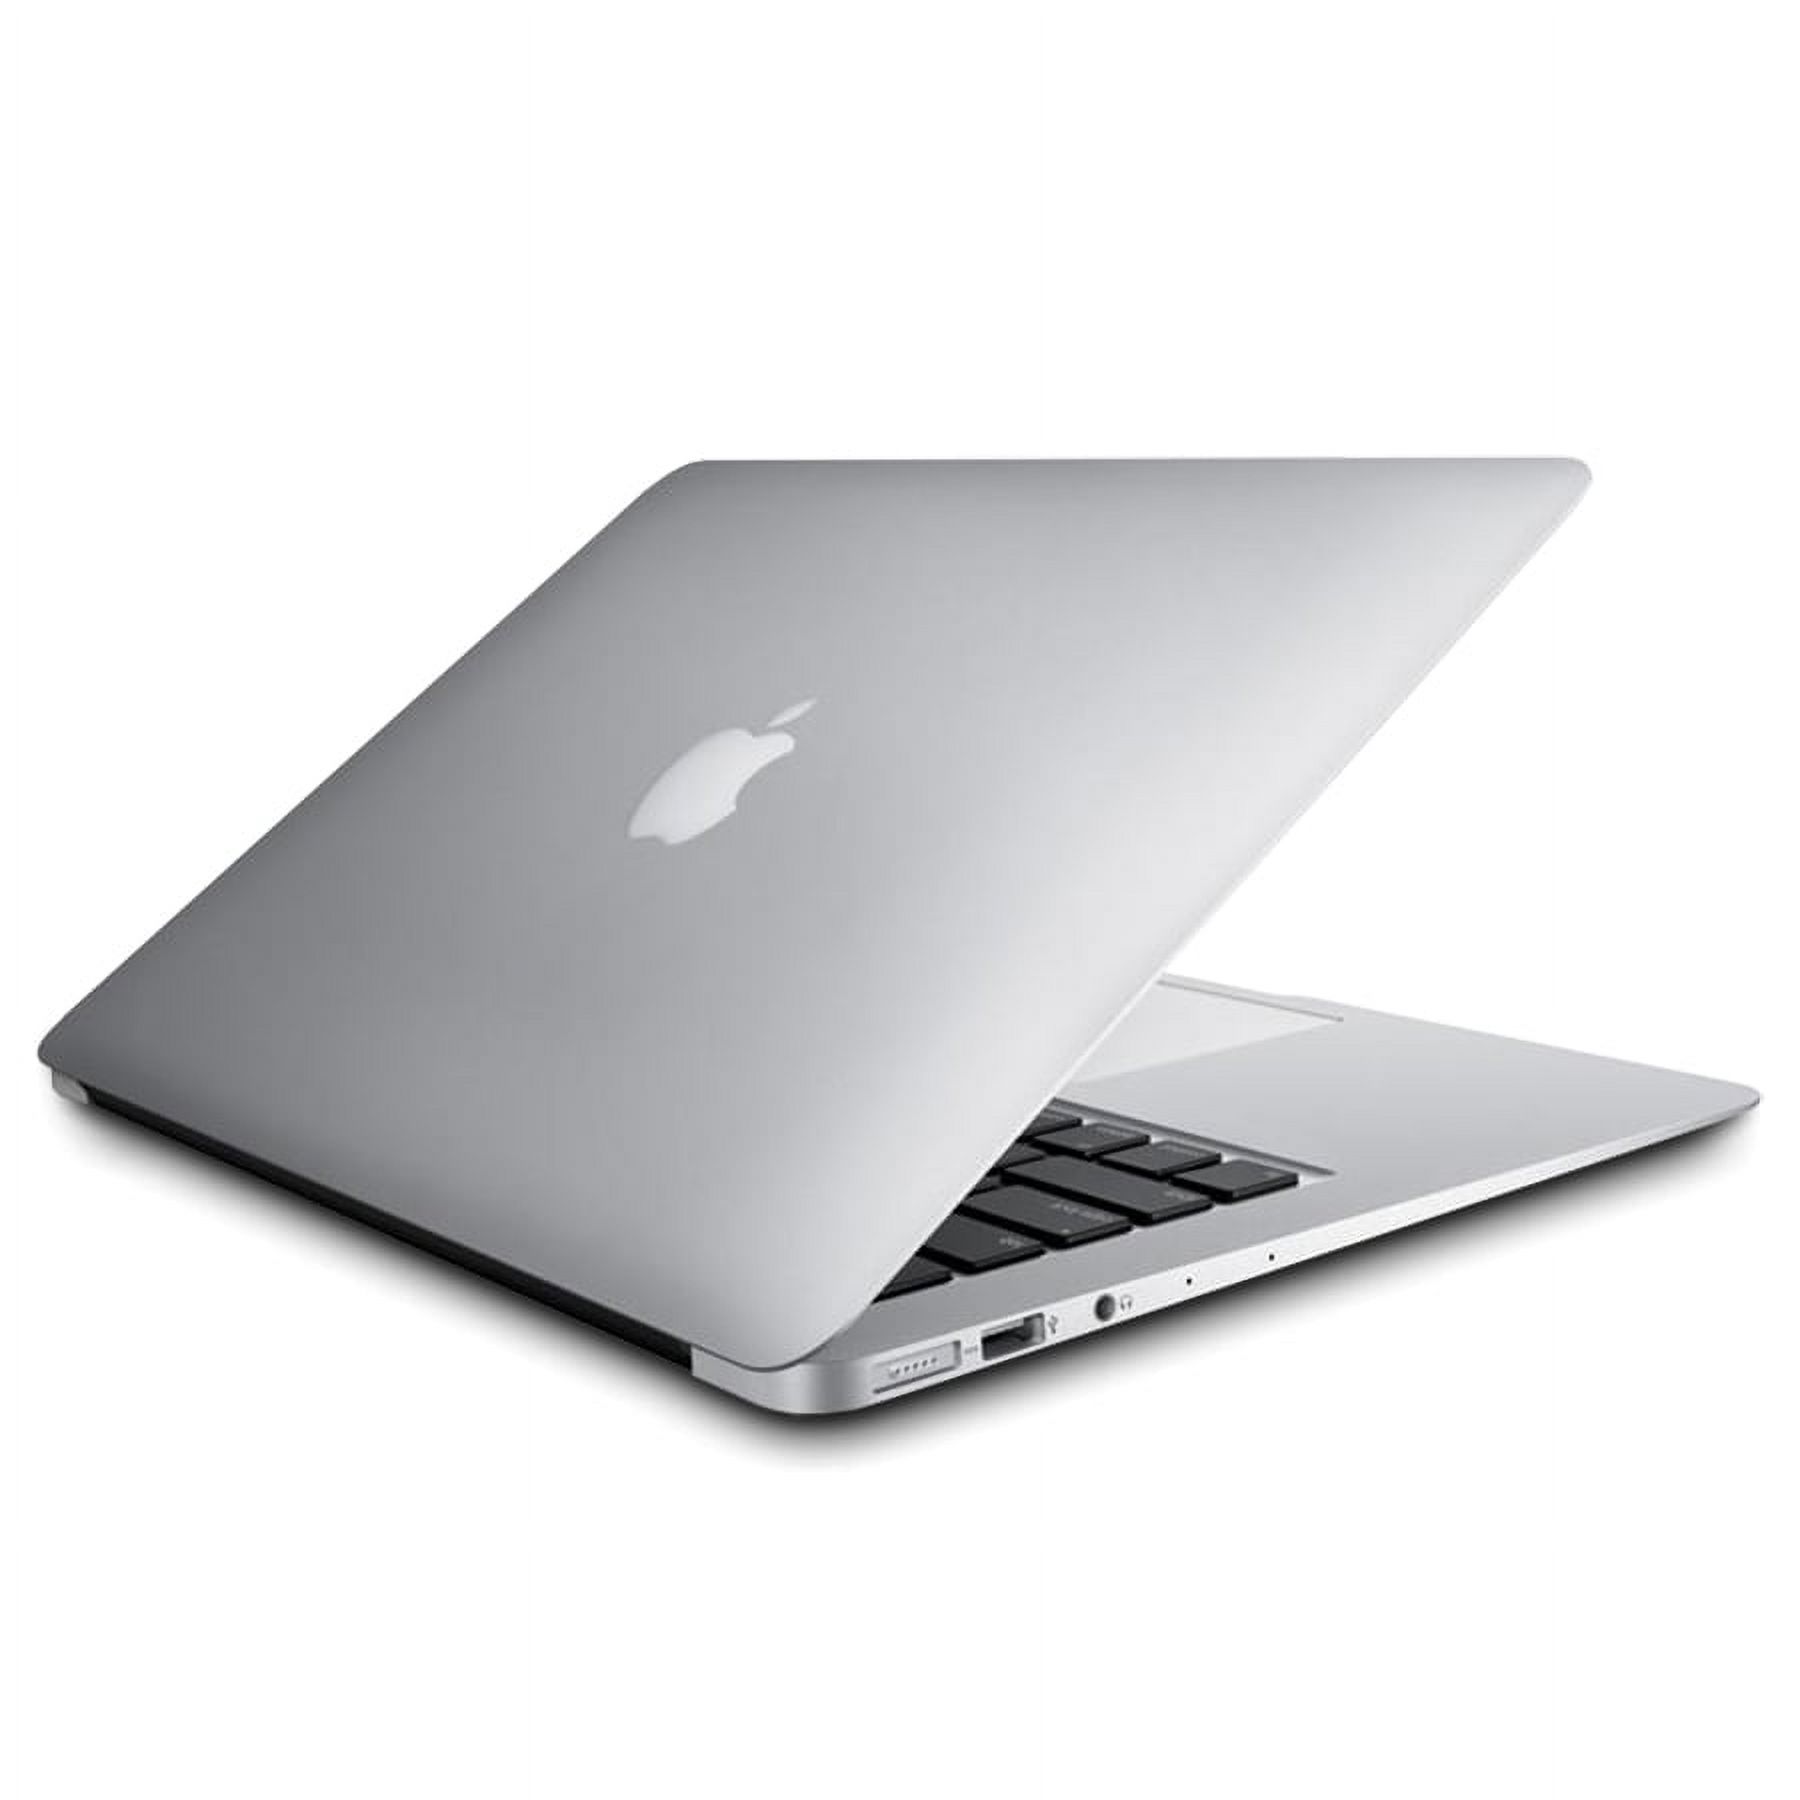 Restored Apple MacBook Air, 13.3" Laptop, Intel Core i5, 8GB RAM, 256GB SSD, None, Mac OS X 10.10, Silver, MMGG2LL/A (Refurbished) - image 4 of 4